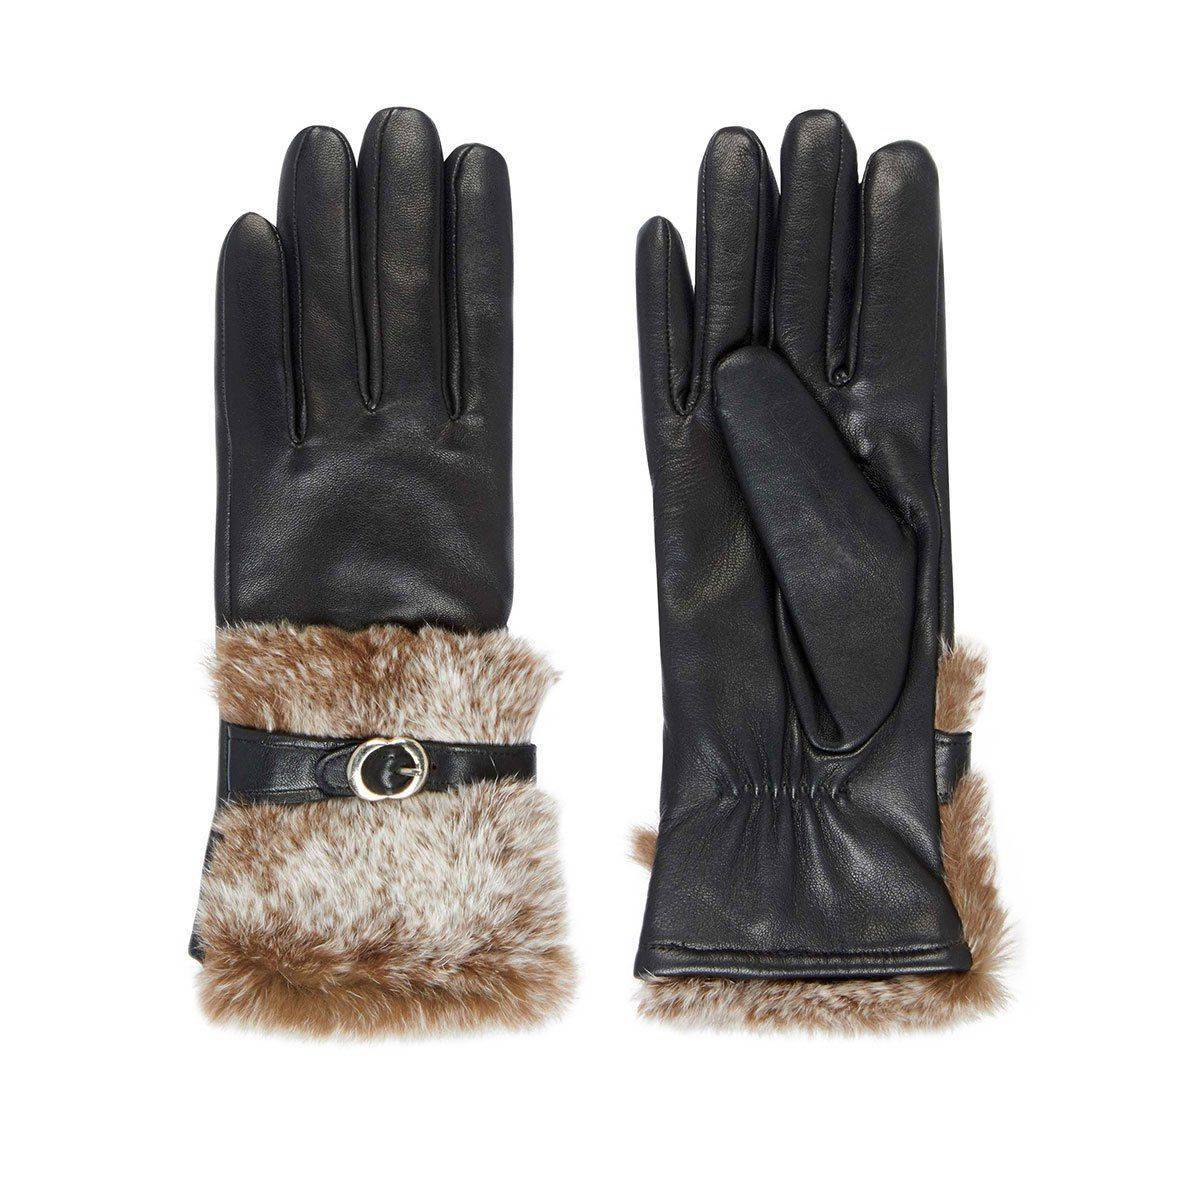 Перчатки EMU Australia ACCE - Accessories Willow Gloves W7005, цвет черный, размер M/L - фото 1